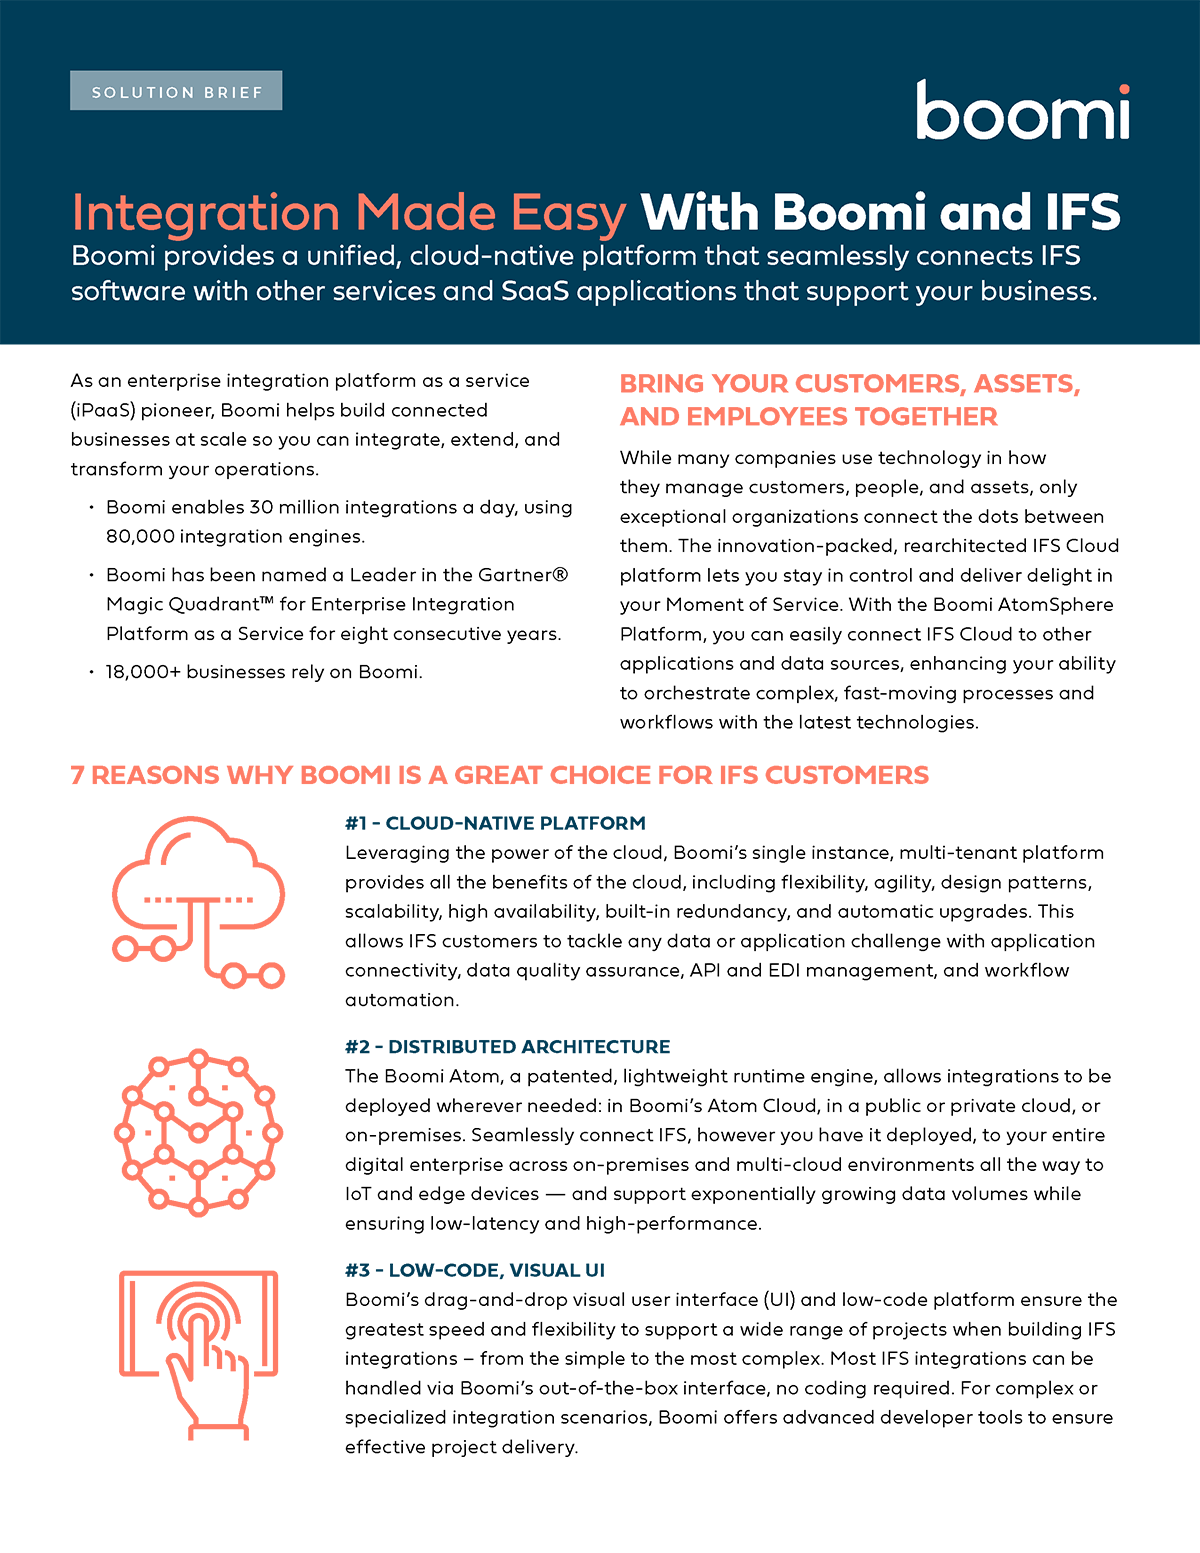 IFS Solution Brief PDF